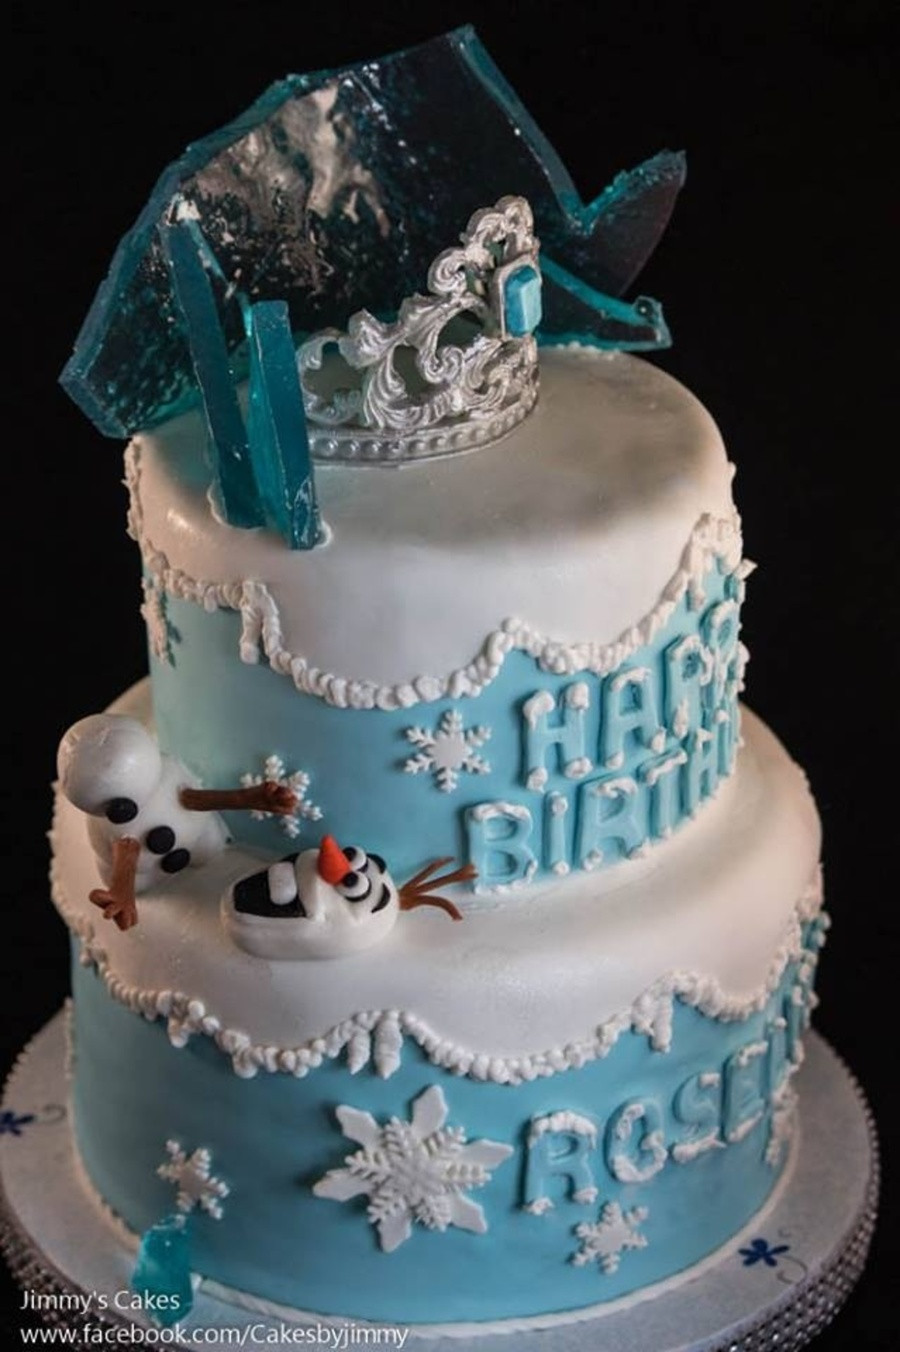 Best ideas about Frozen Birthday Cake
. Save or Pin Disney Frozen Birthday Cake CakeCentral Now.